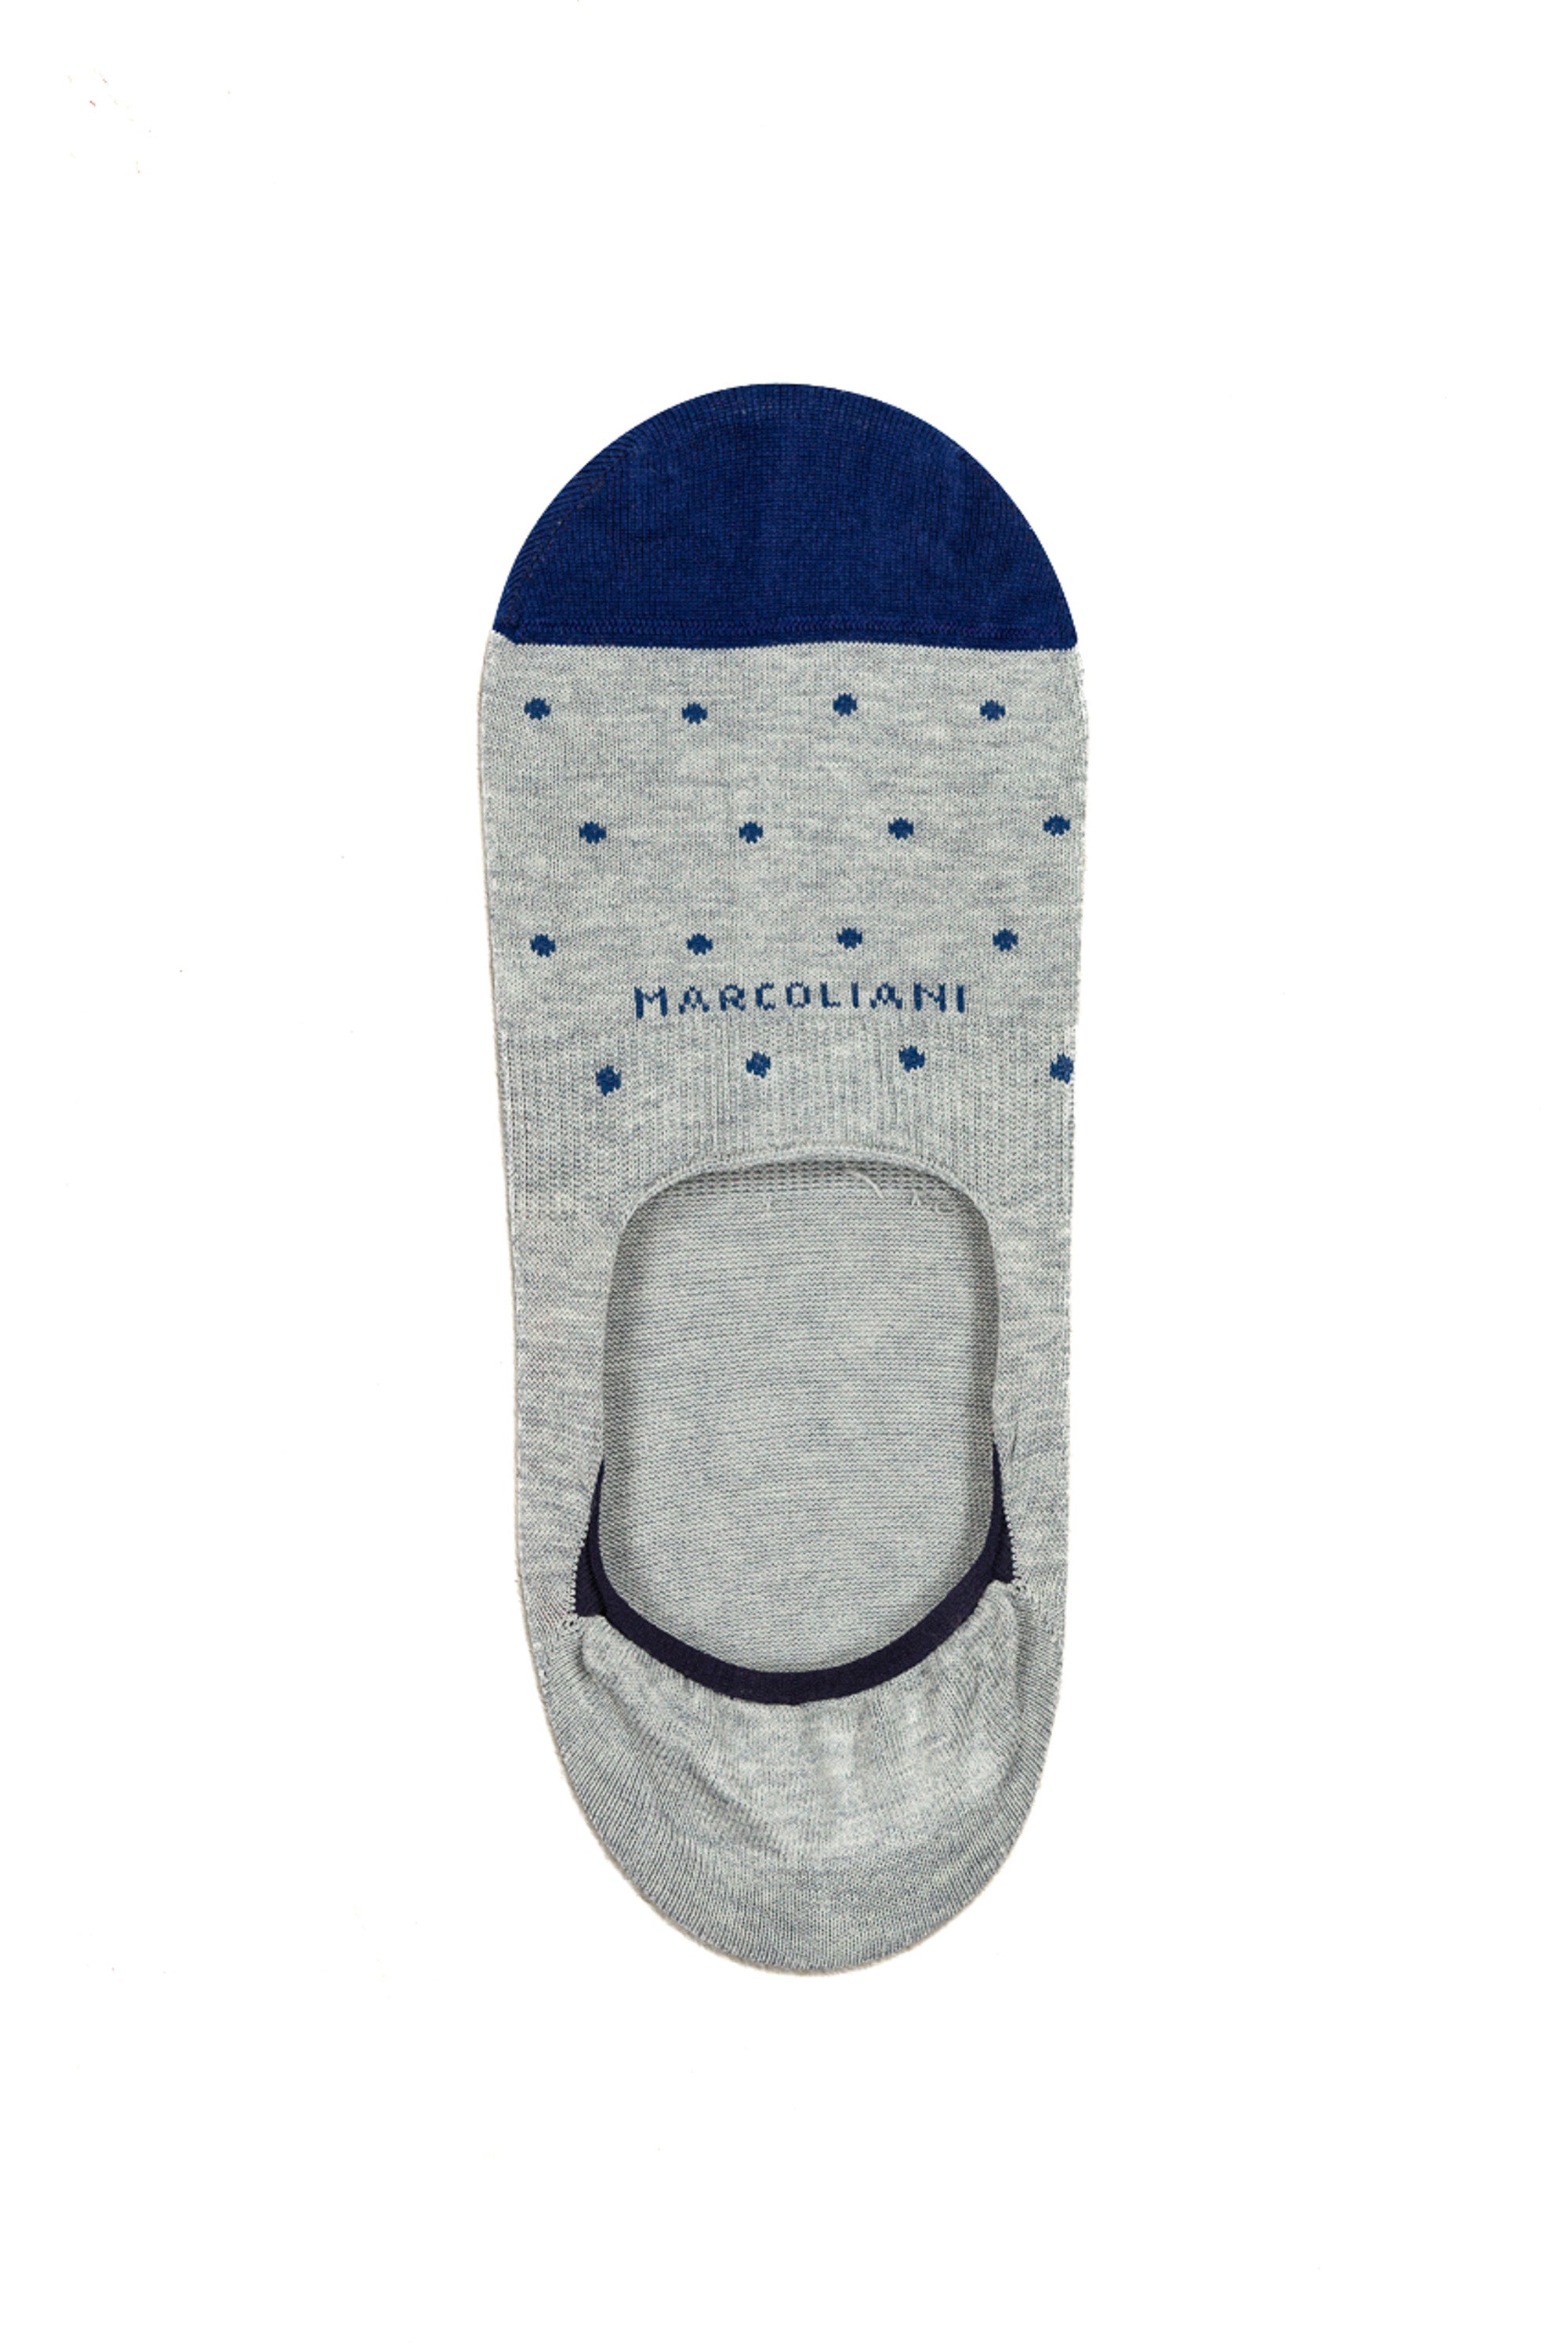 Polka dot patterned ghost socks